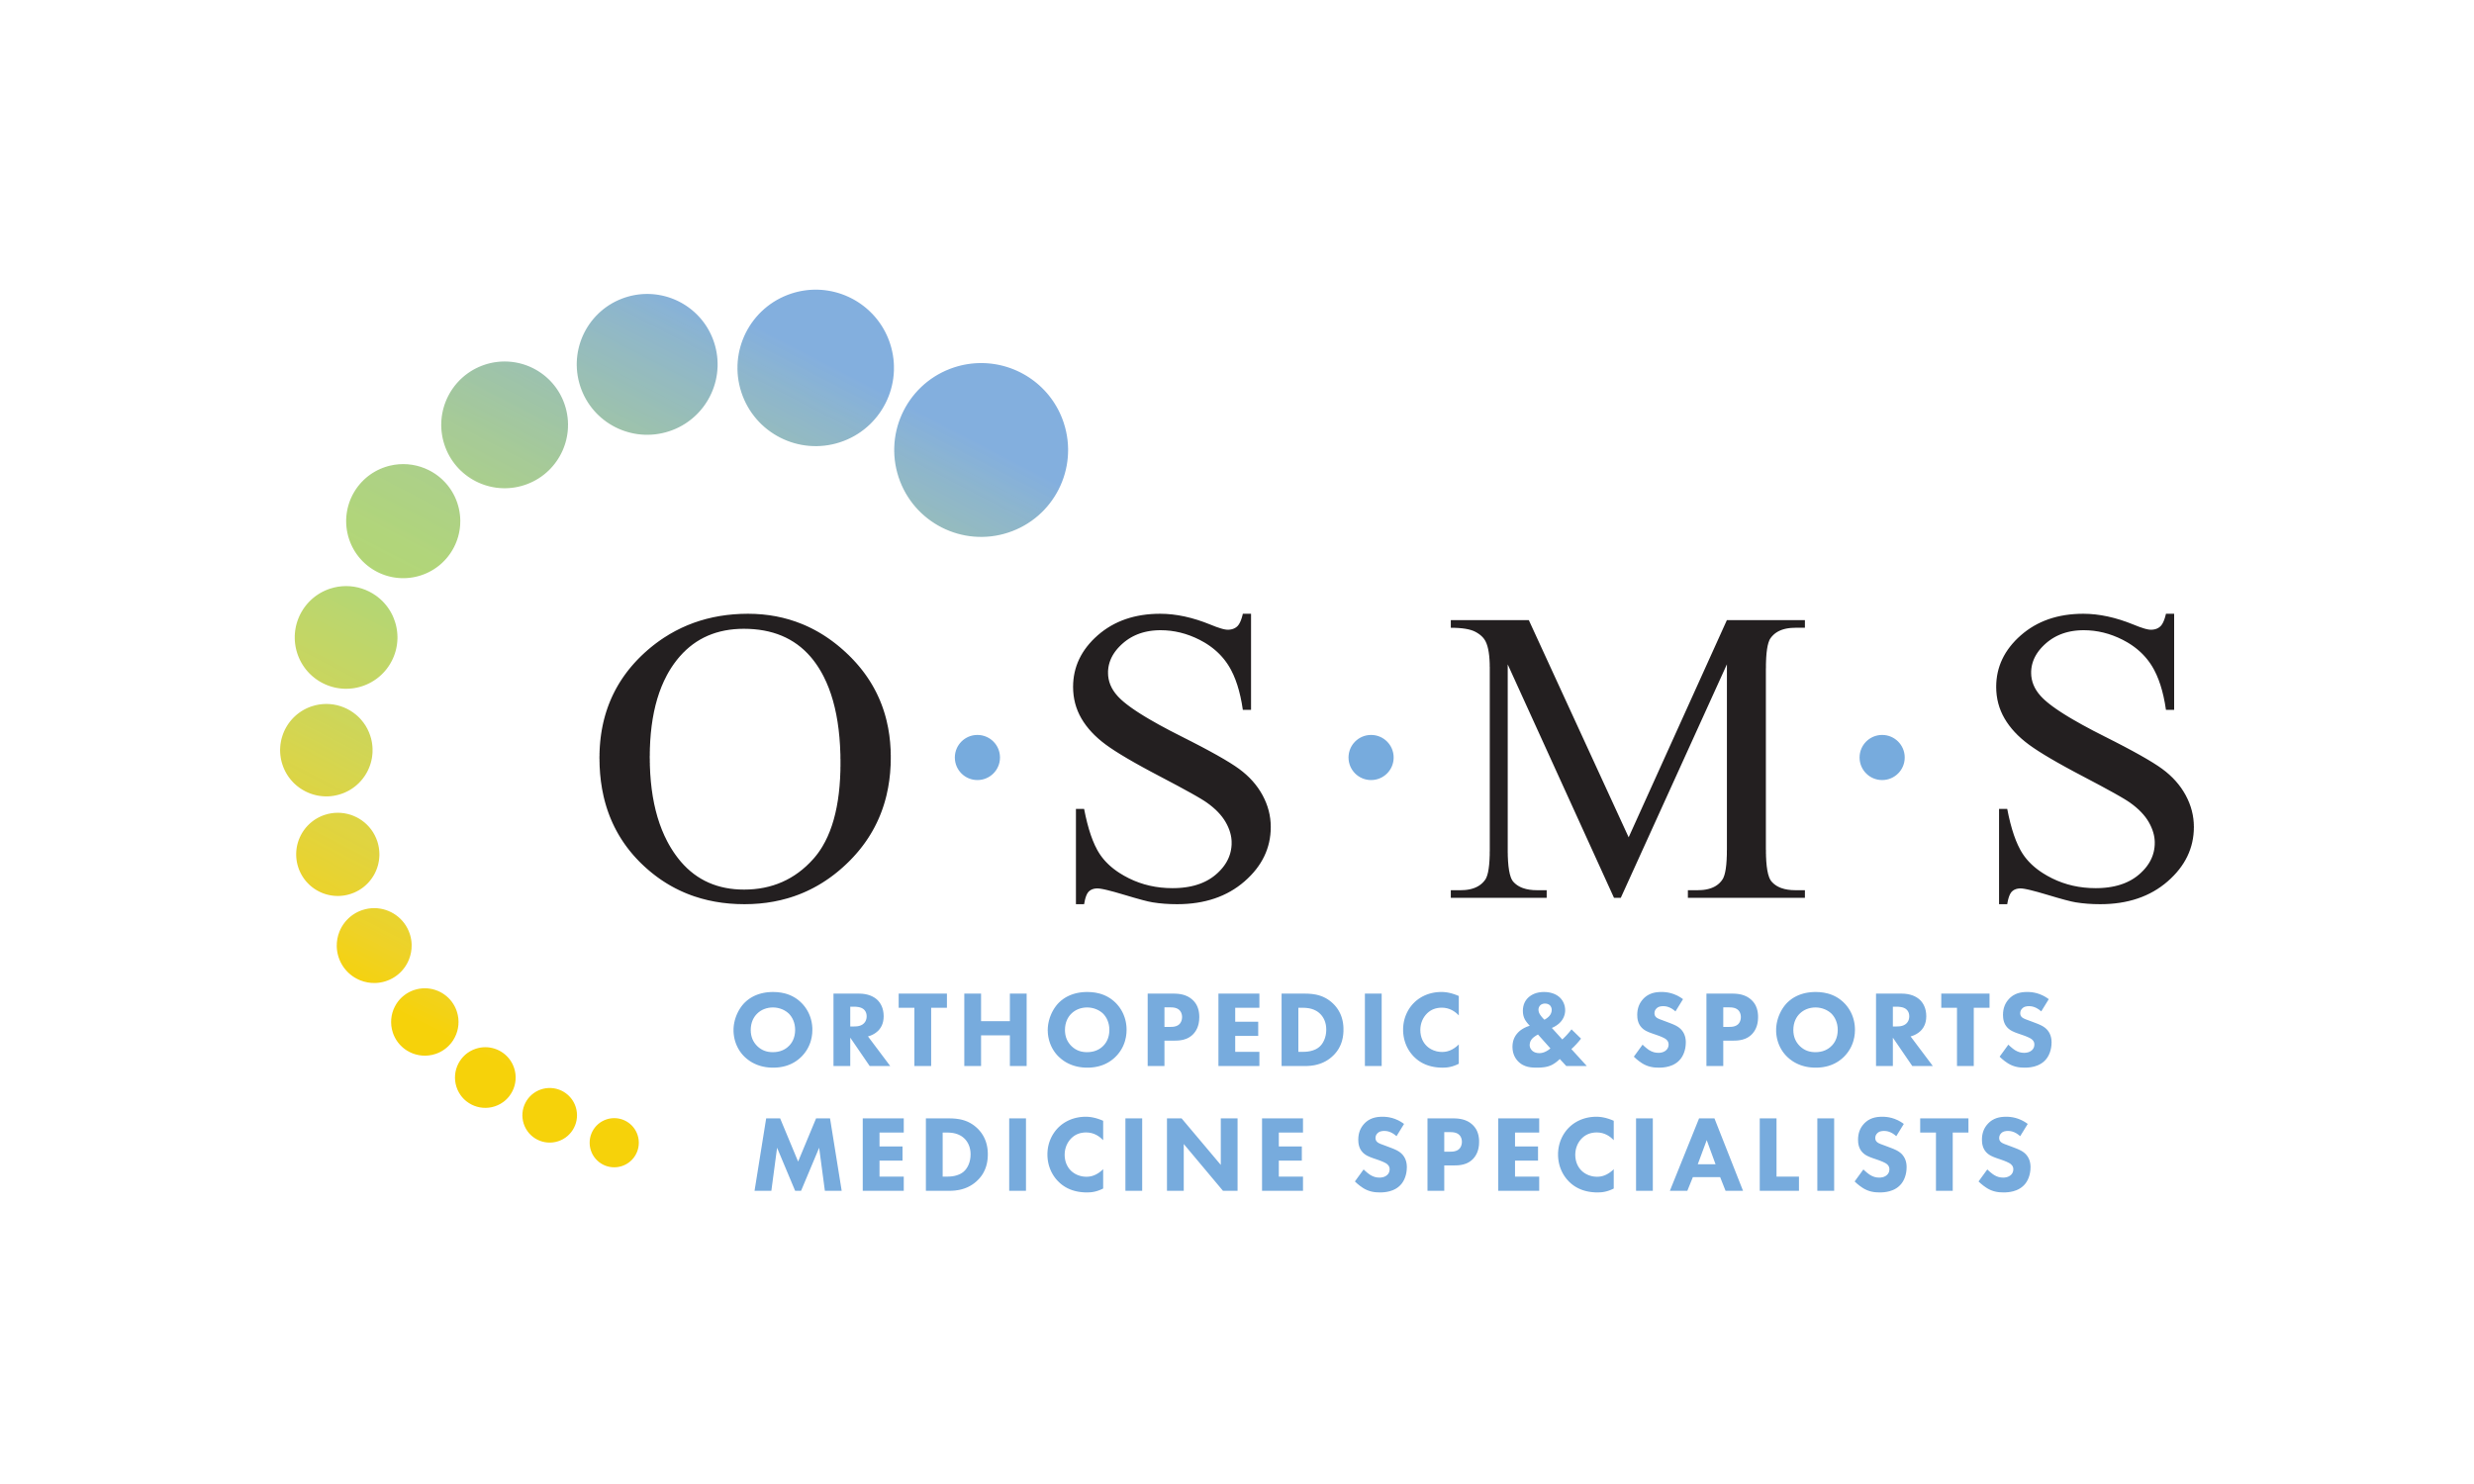 Orthopedic & Sports Medicine Specialists logo.